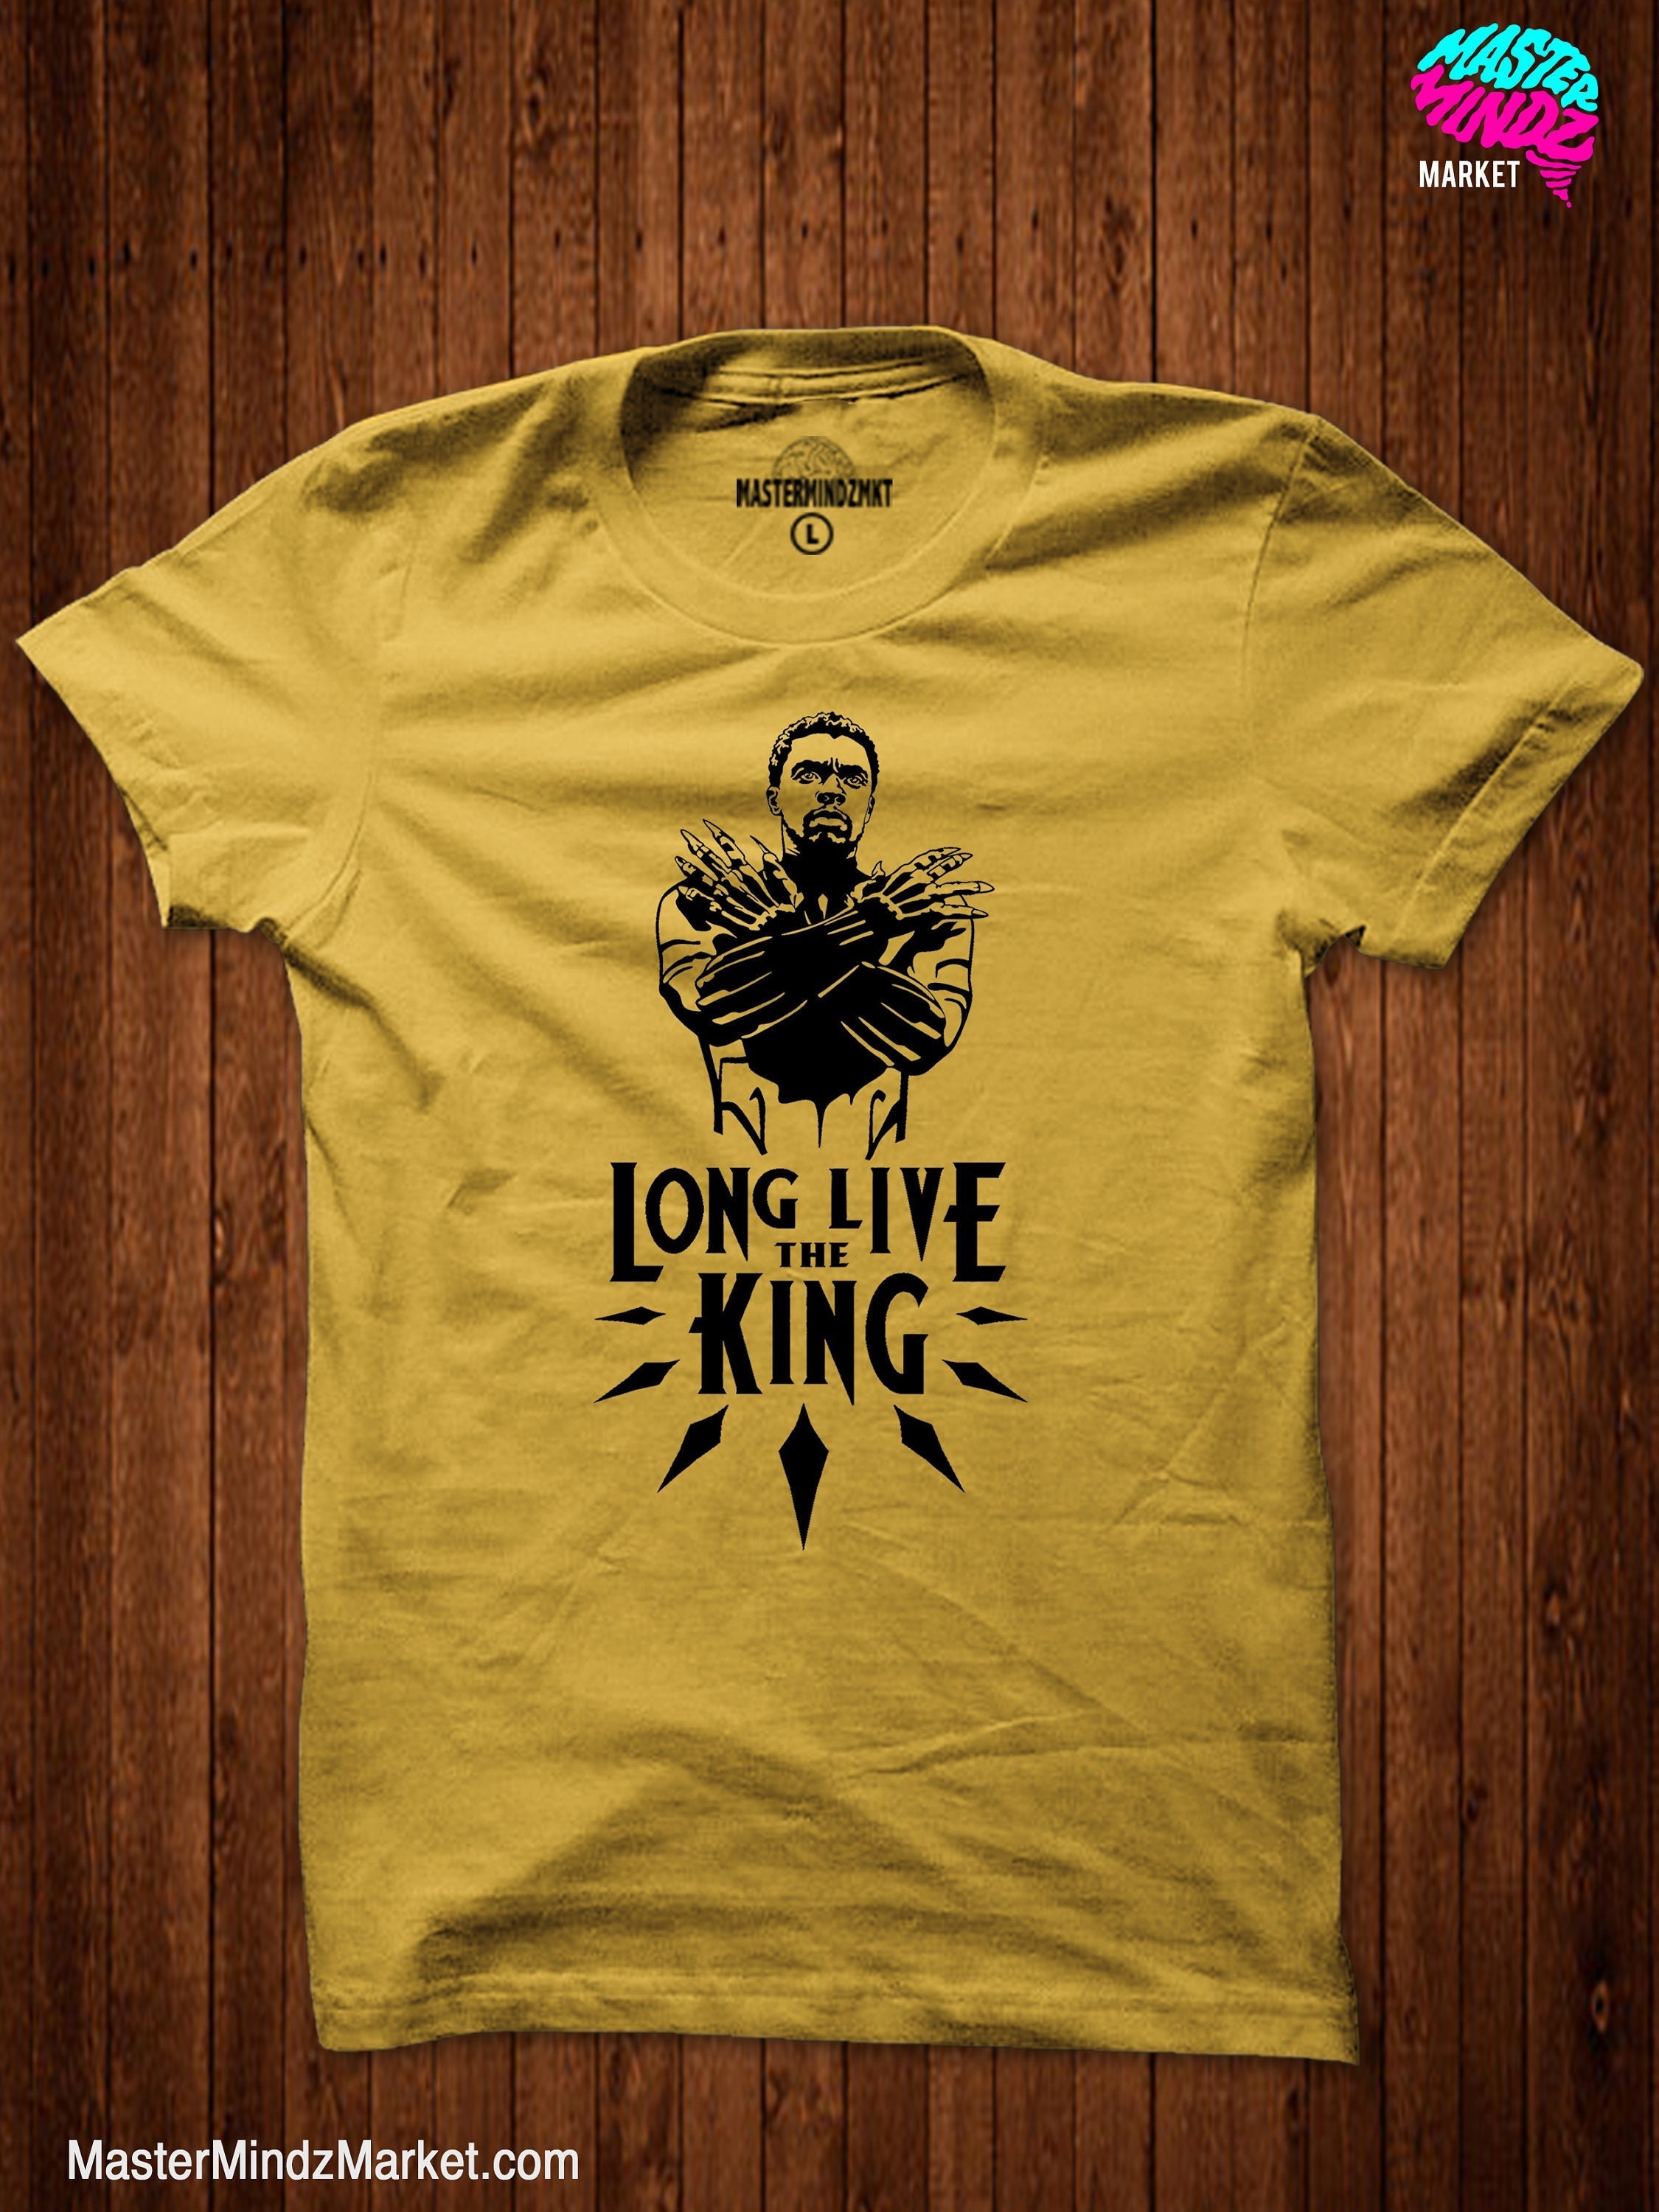 Long Live the King t-shirt, Chadwick Boseman Shirt, T'challa Shirt